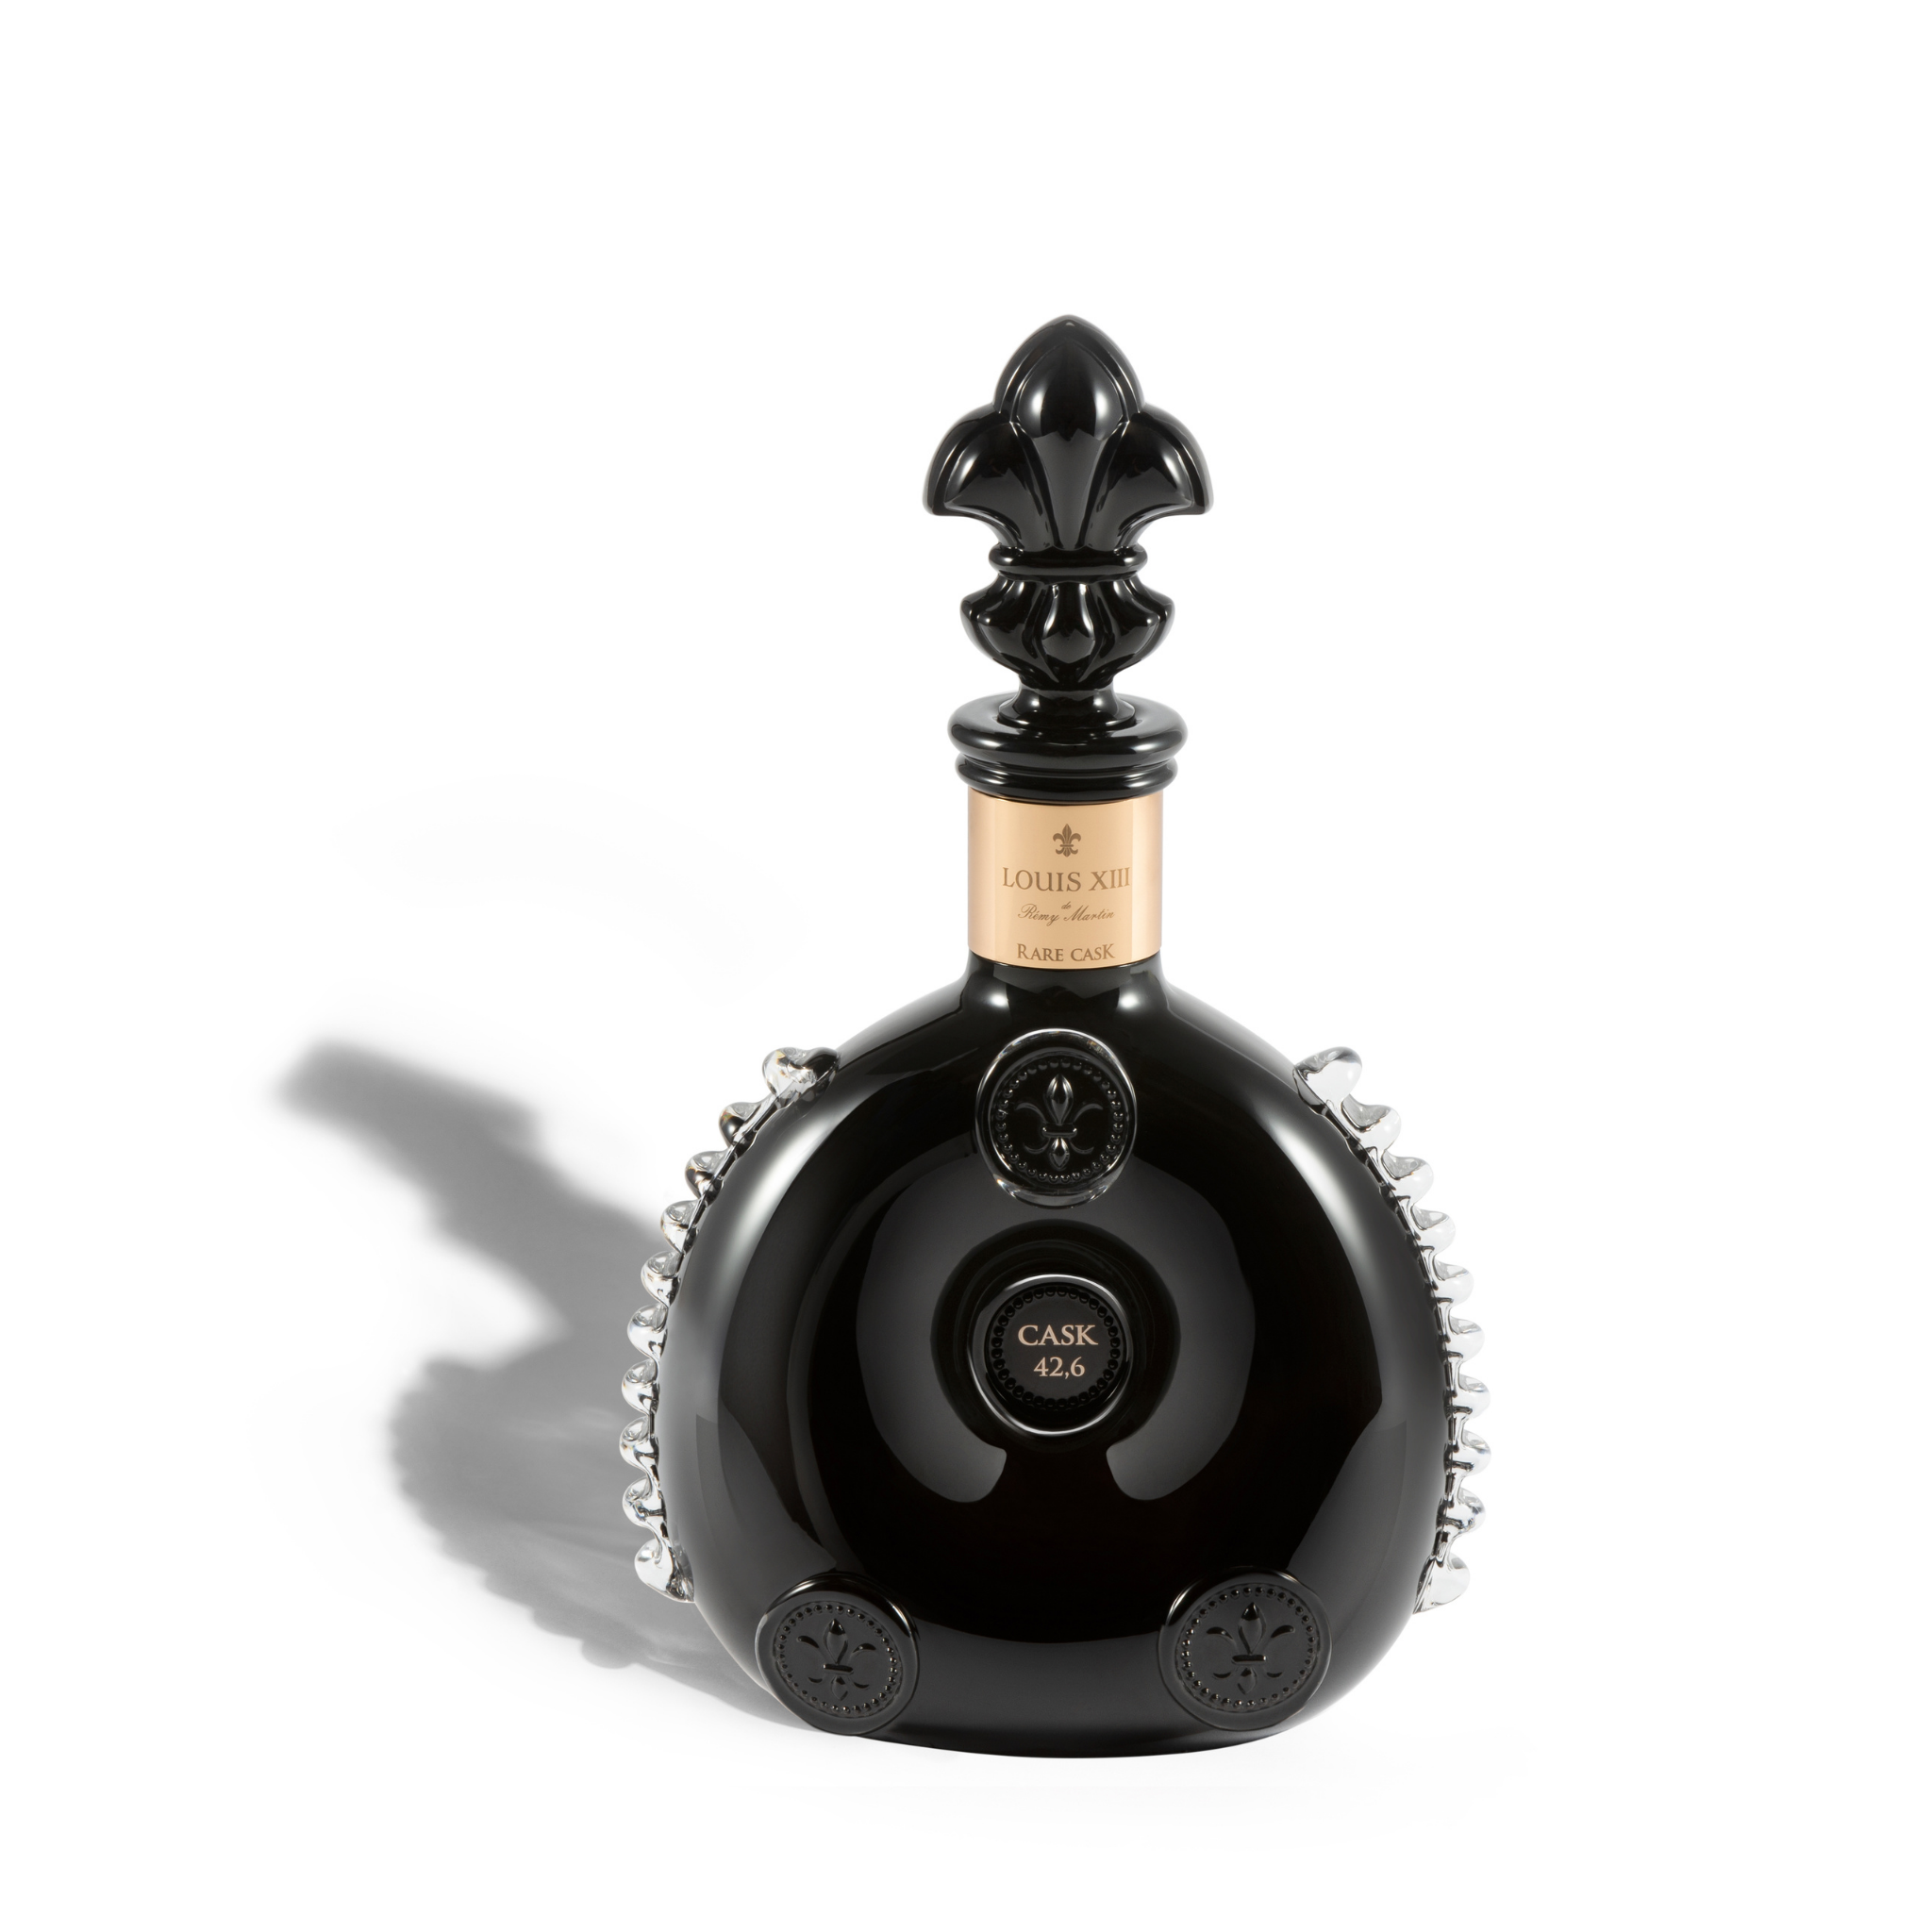 remy martin louis xiii cognac collectible